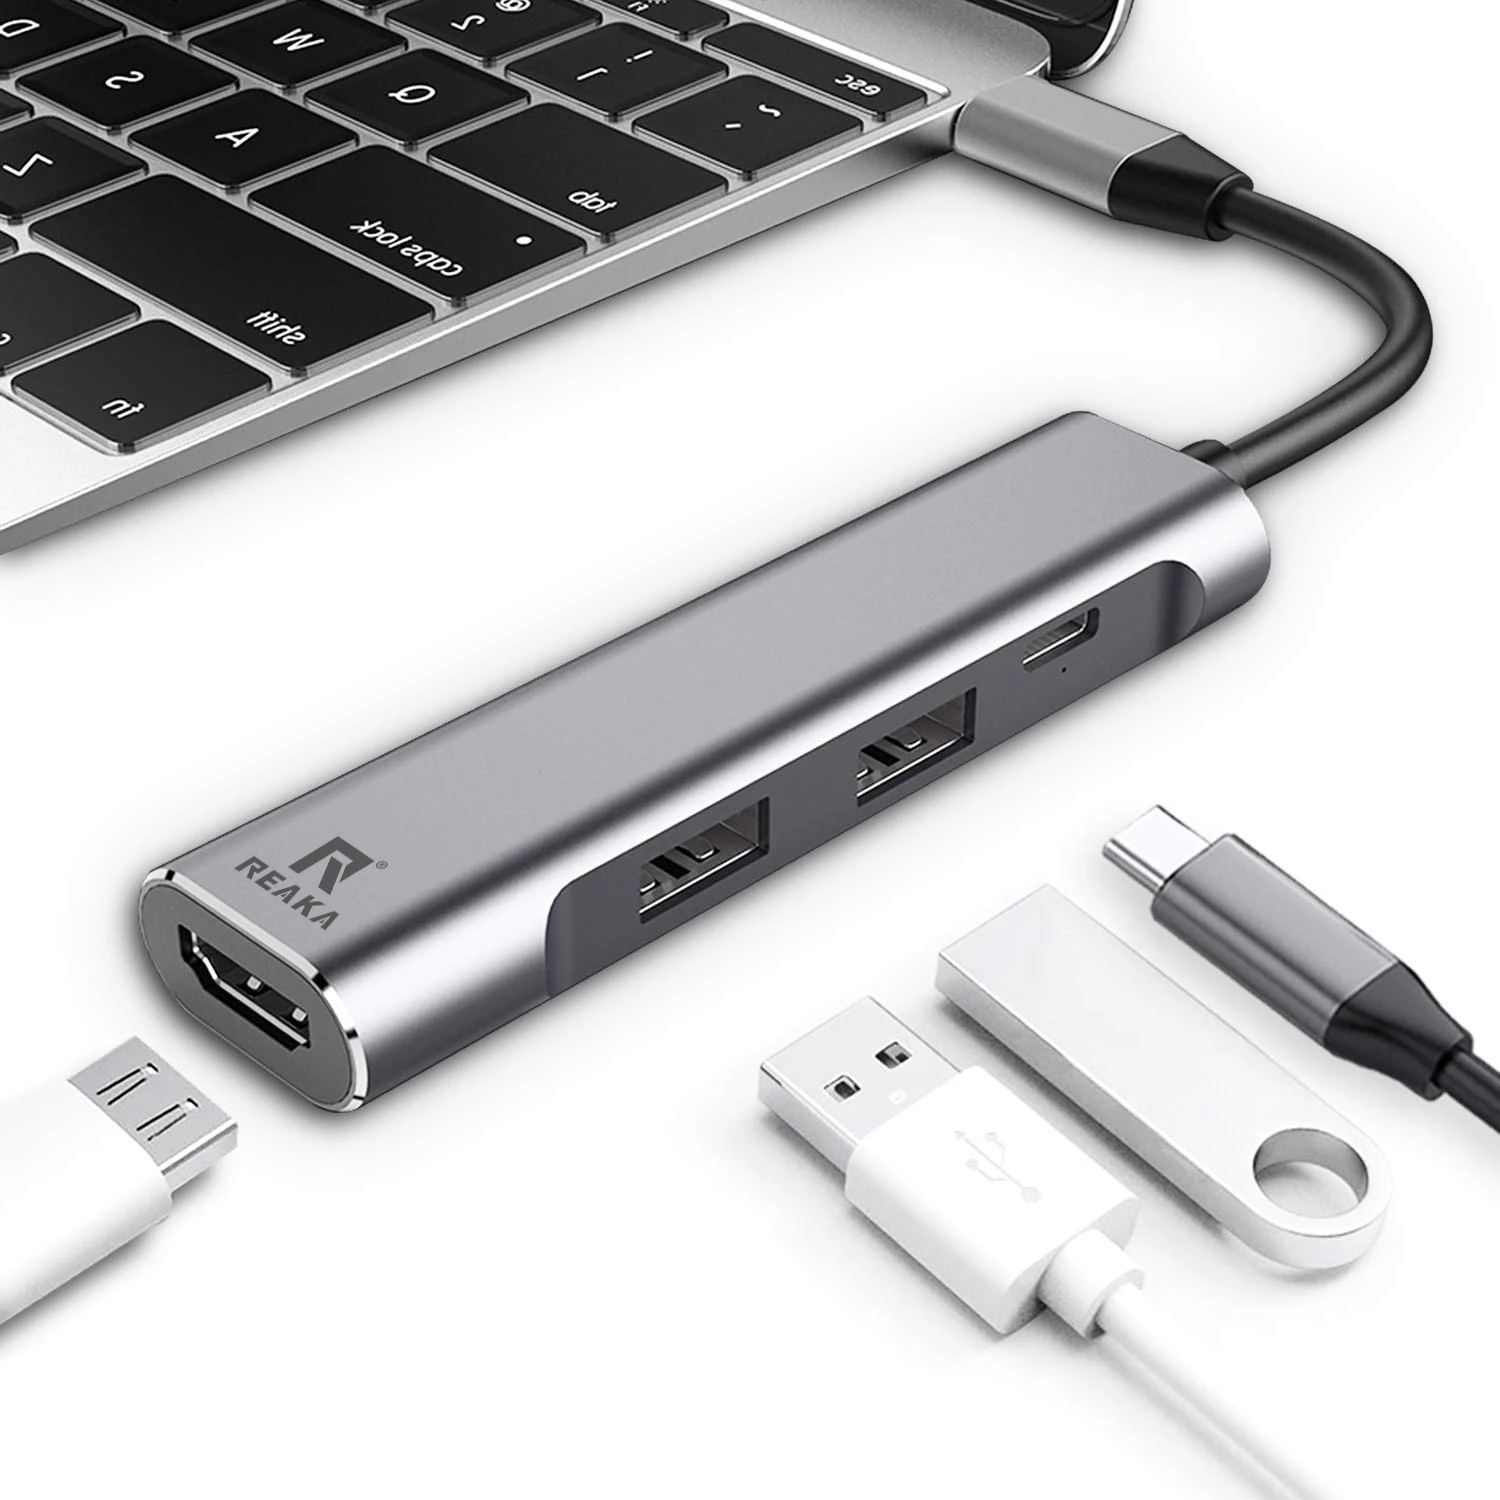 Концентратор USB Type C док-станция для MacBook Pro samsung Galaxy S8 huawei P20 Pro